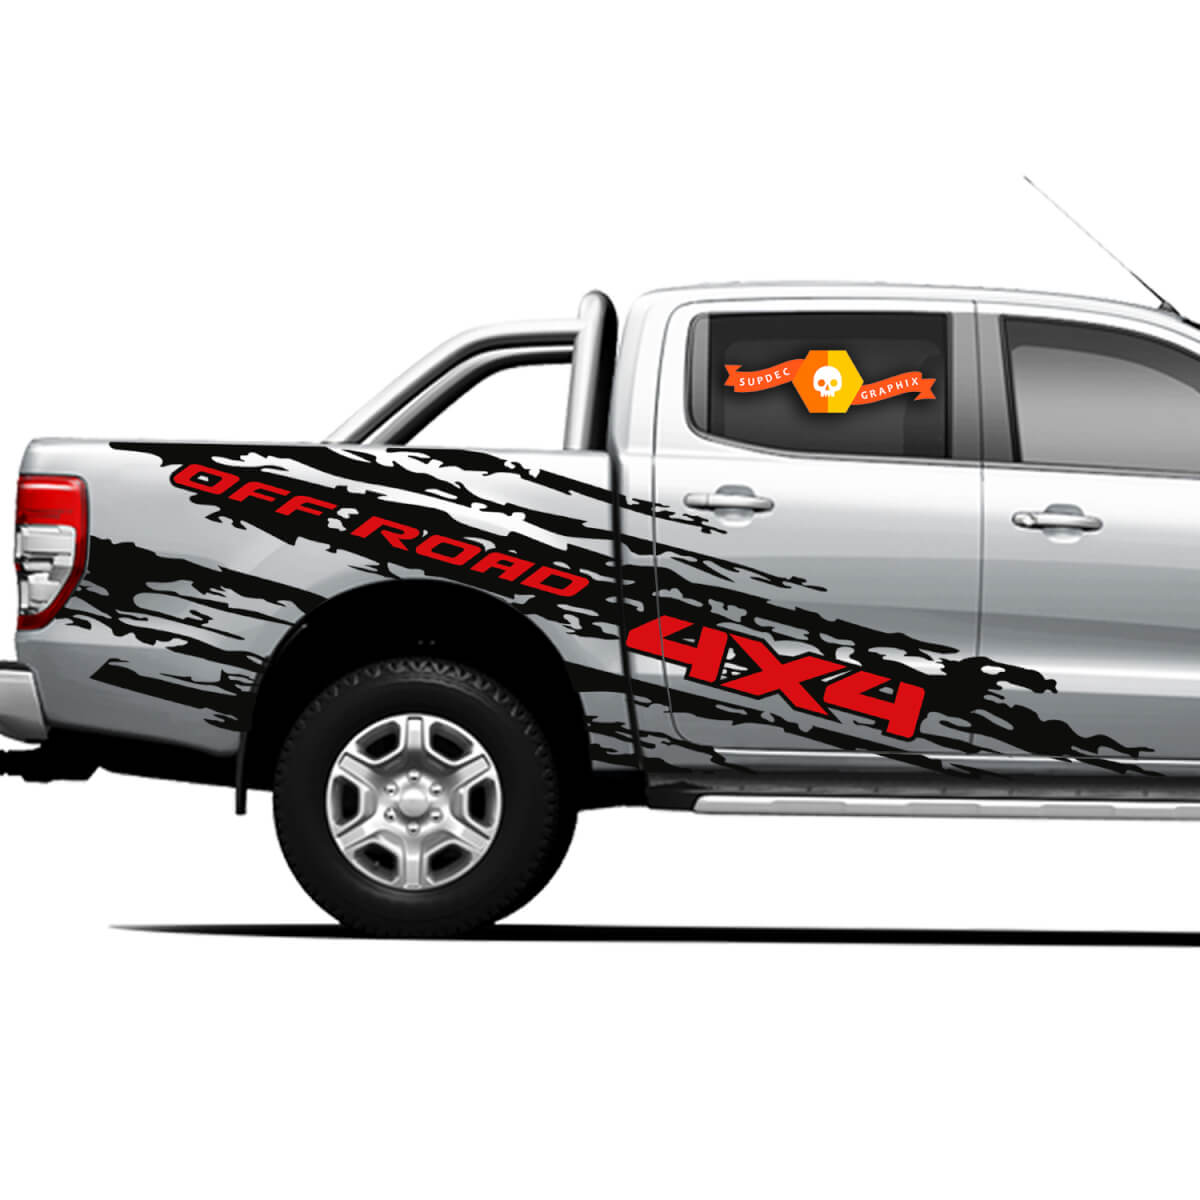 4×4 Off Road Truck Splash side bed Graphics Decals for Ford Ranger 12